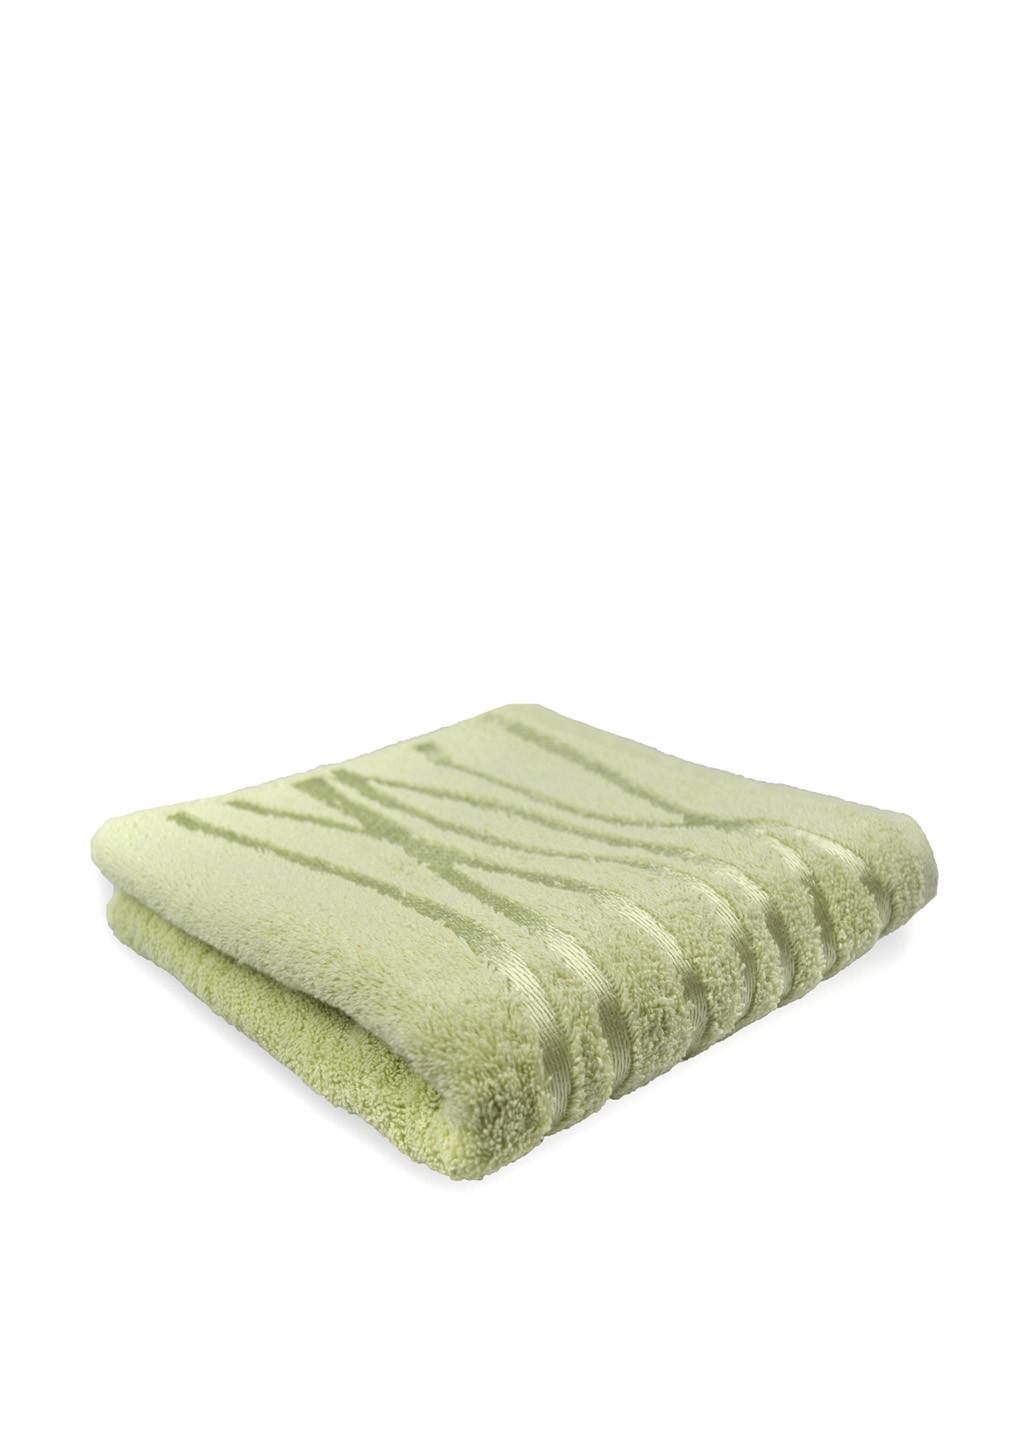 No Brand полотенце, 70х130 см рисунок зеленый производство - Турция